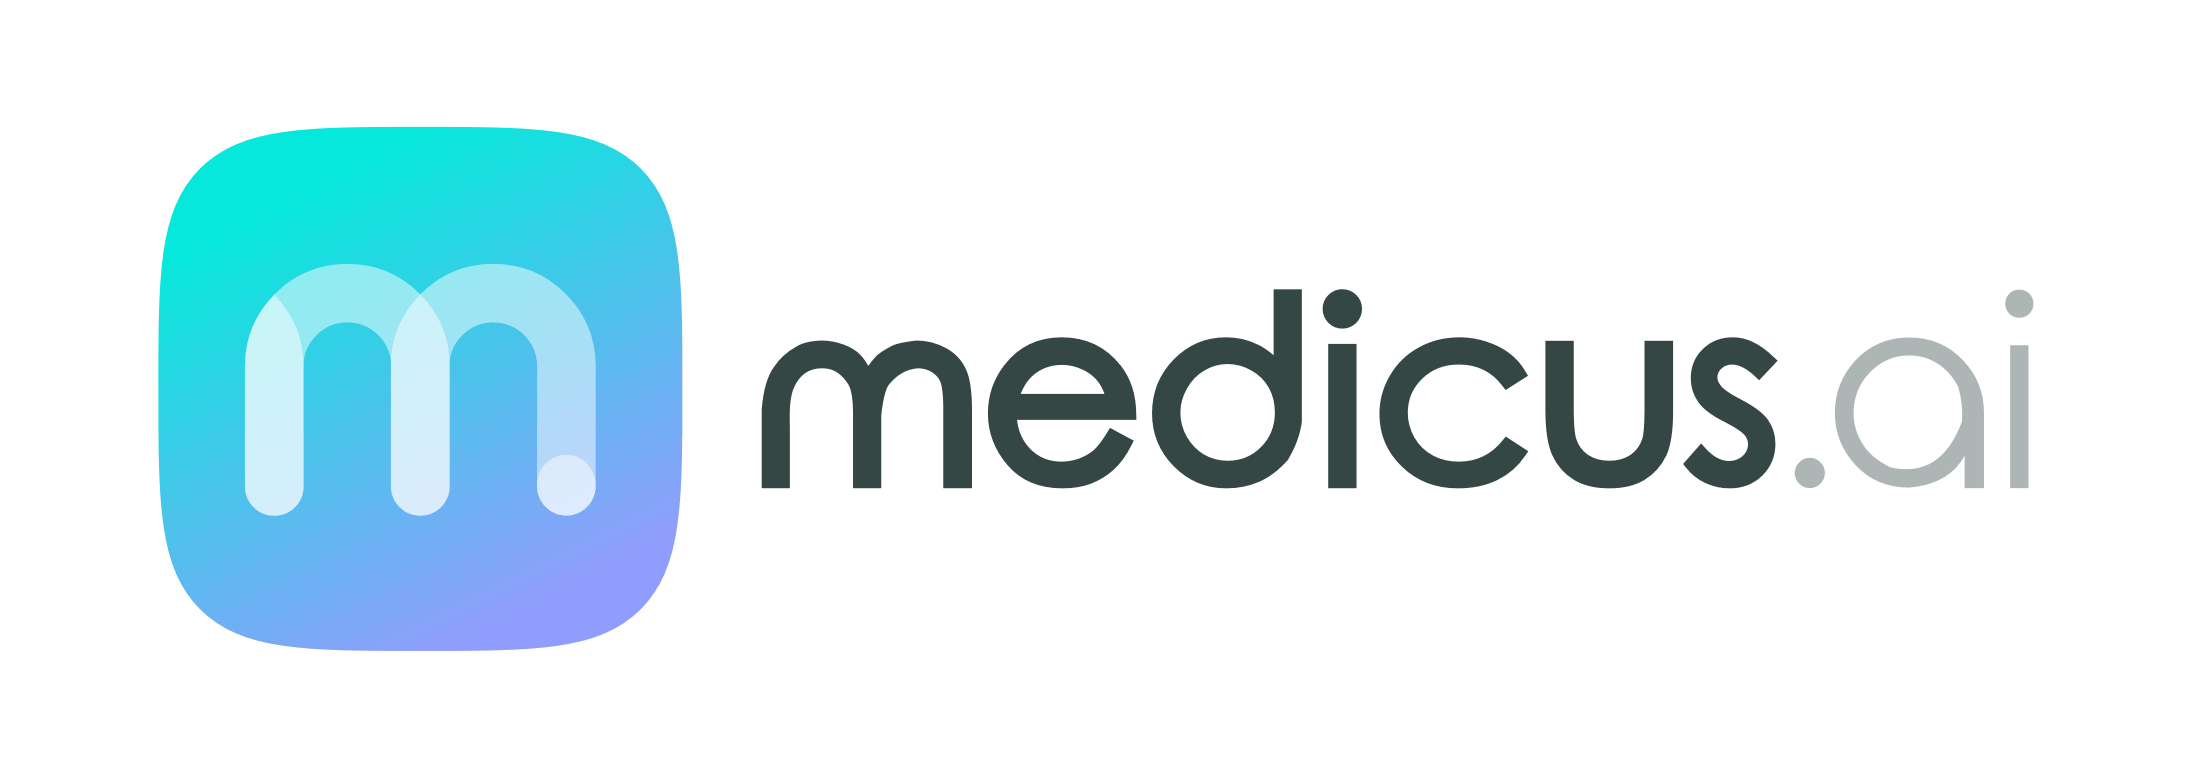 Medicus-logo